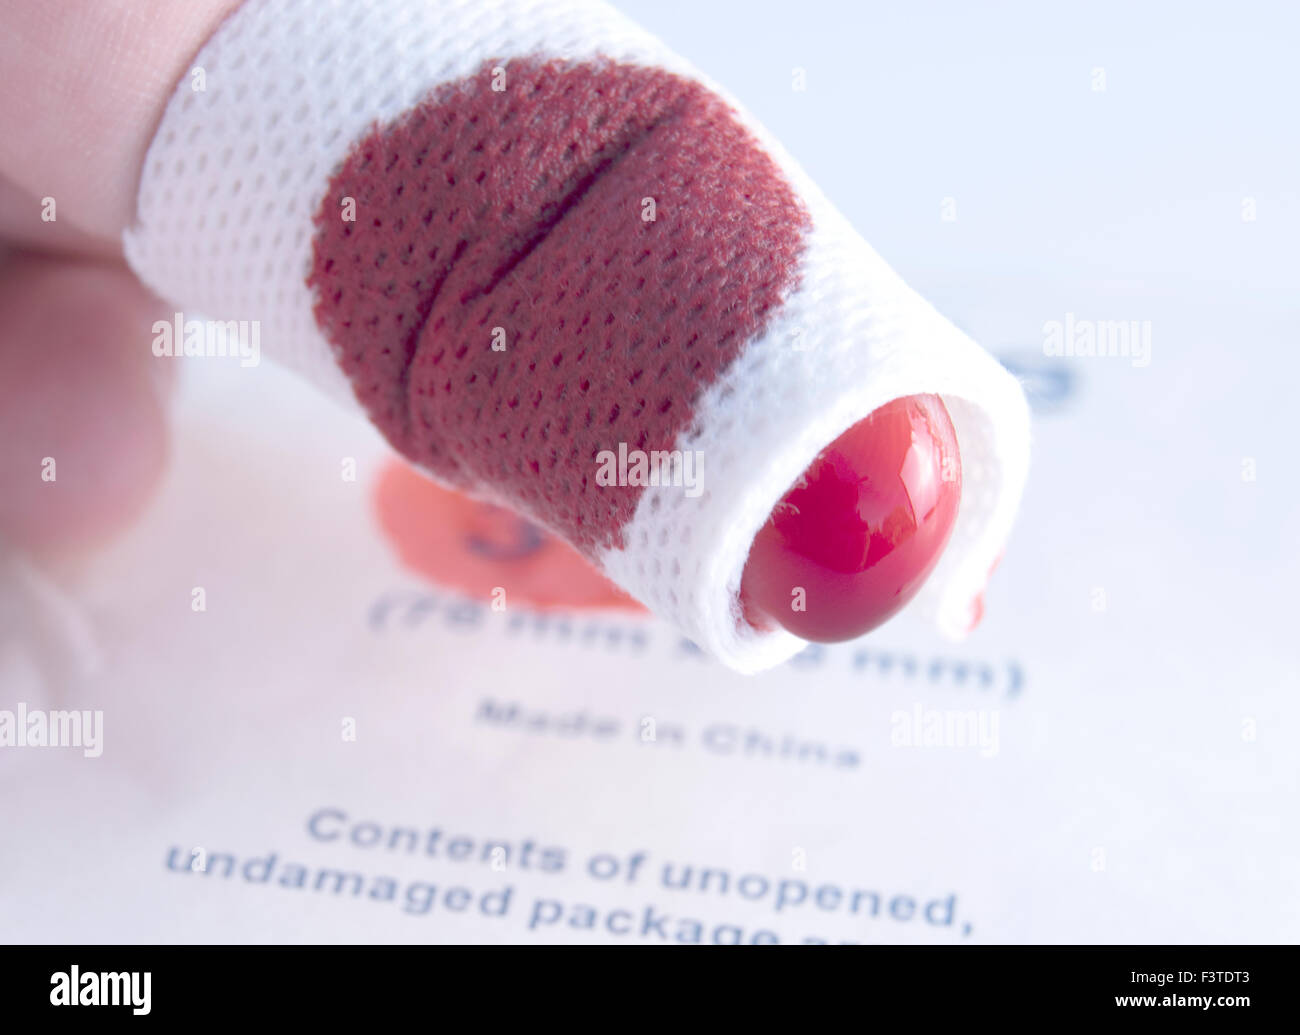 cut finger an blood with gauze bandage Stock Photo - Alamy